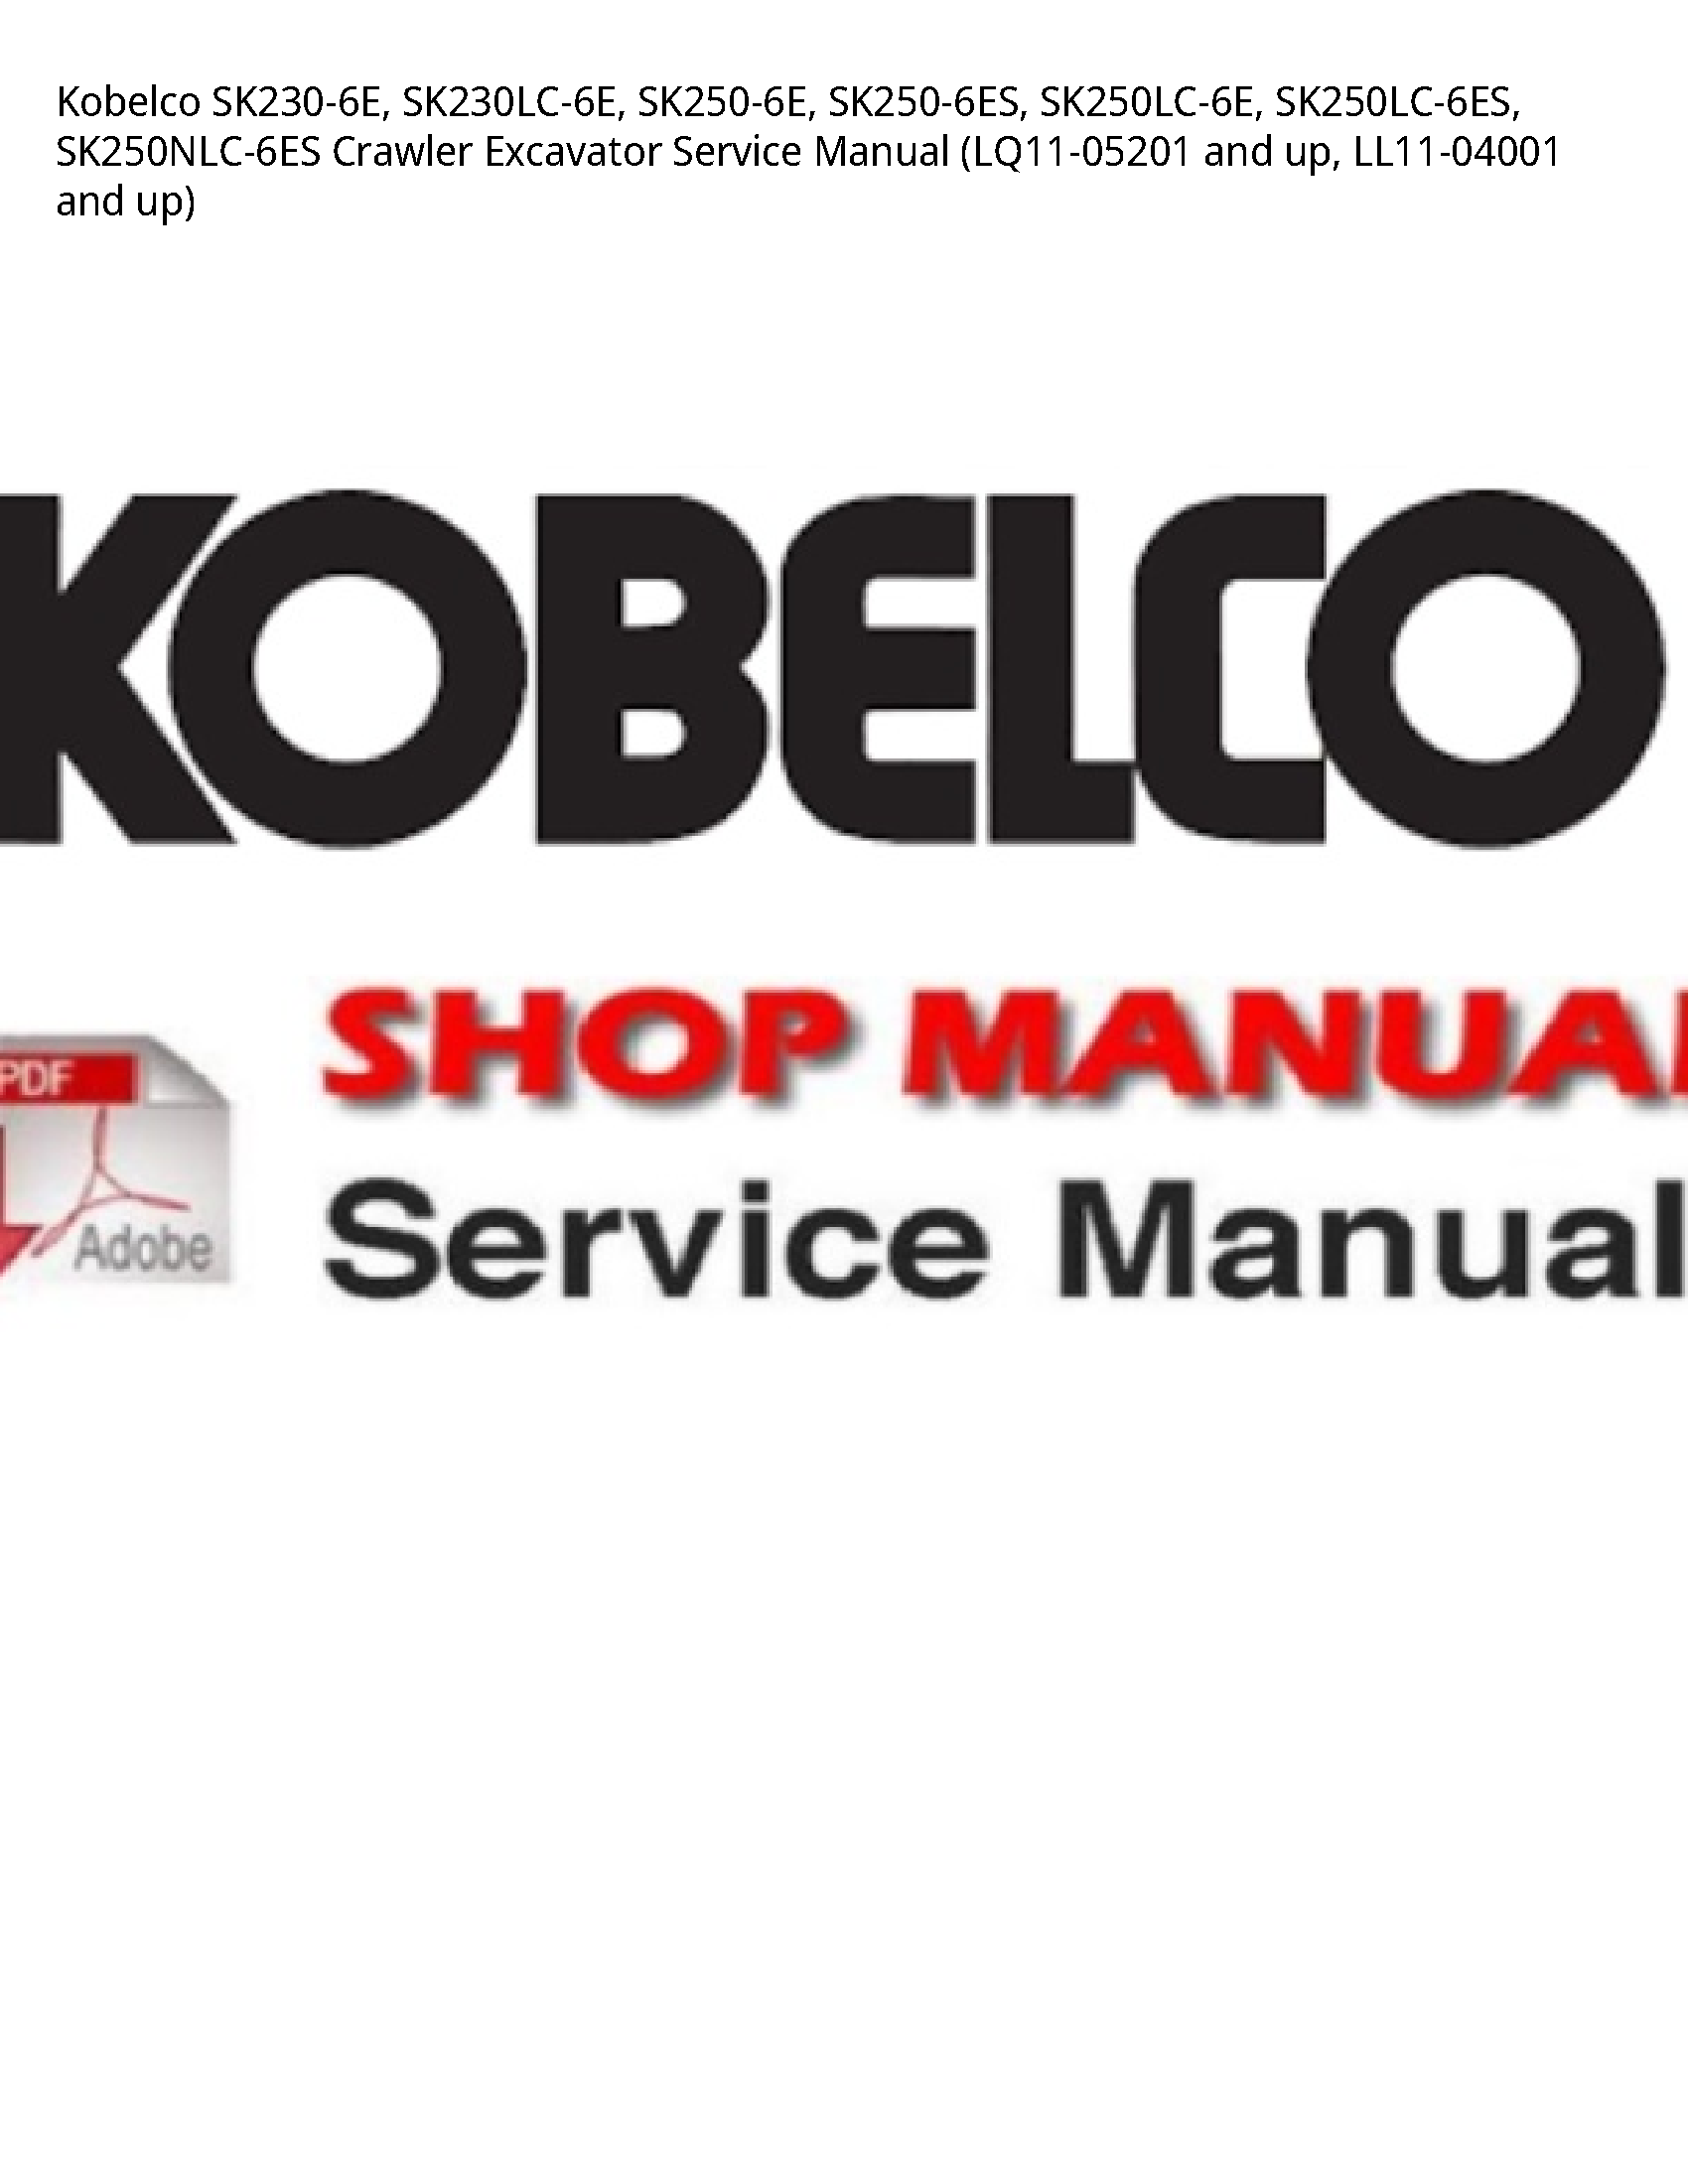 Kobelco SK230-6E Crawler Excavator Service manual